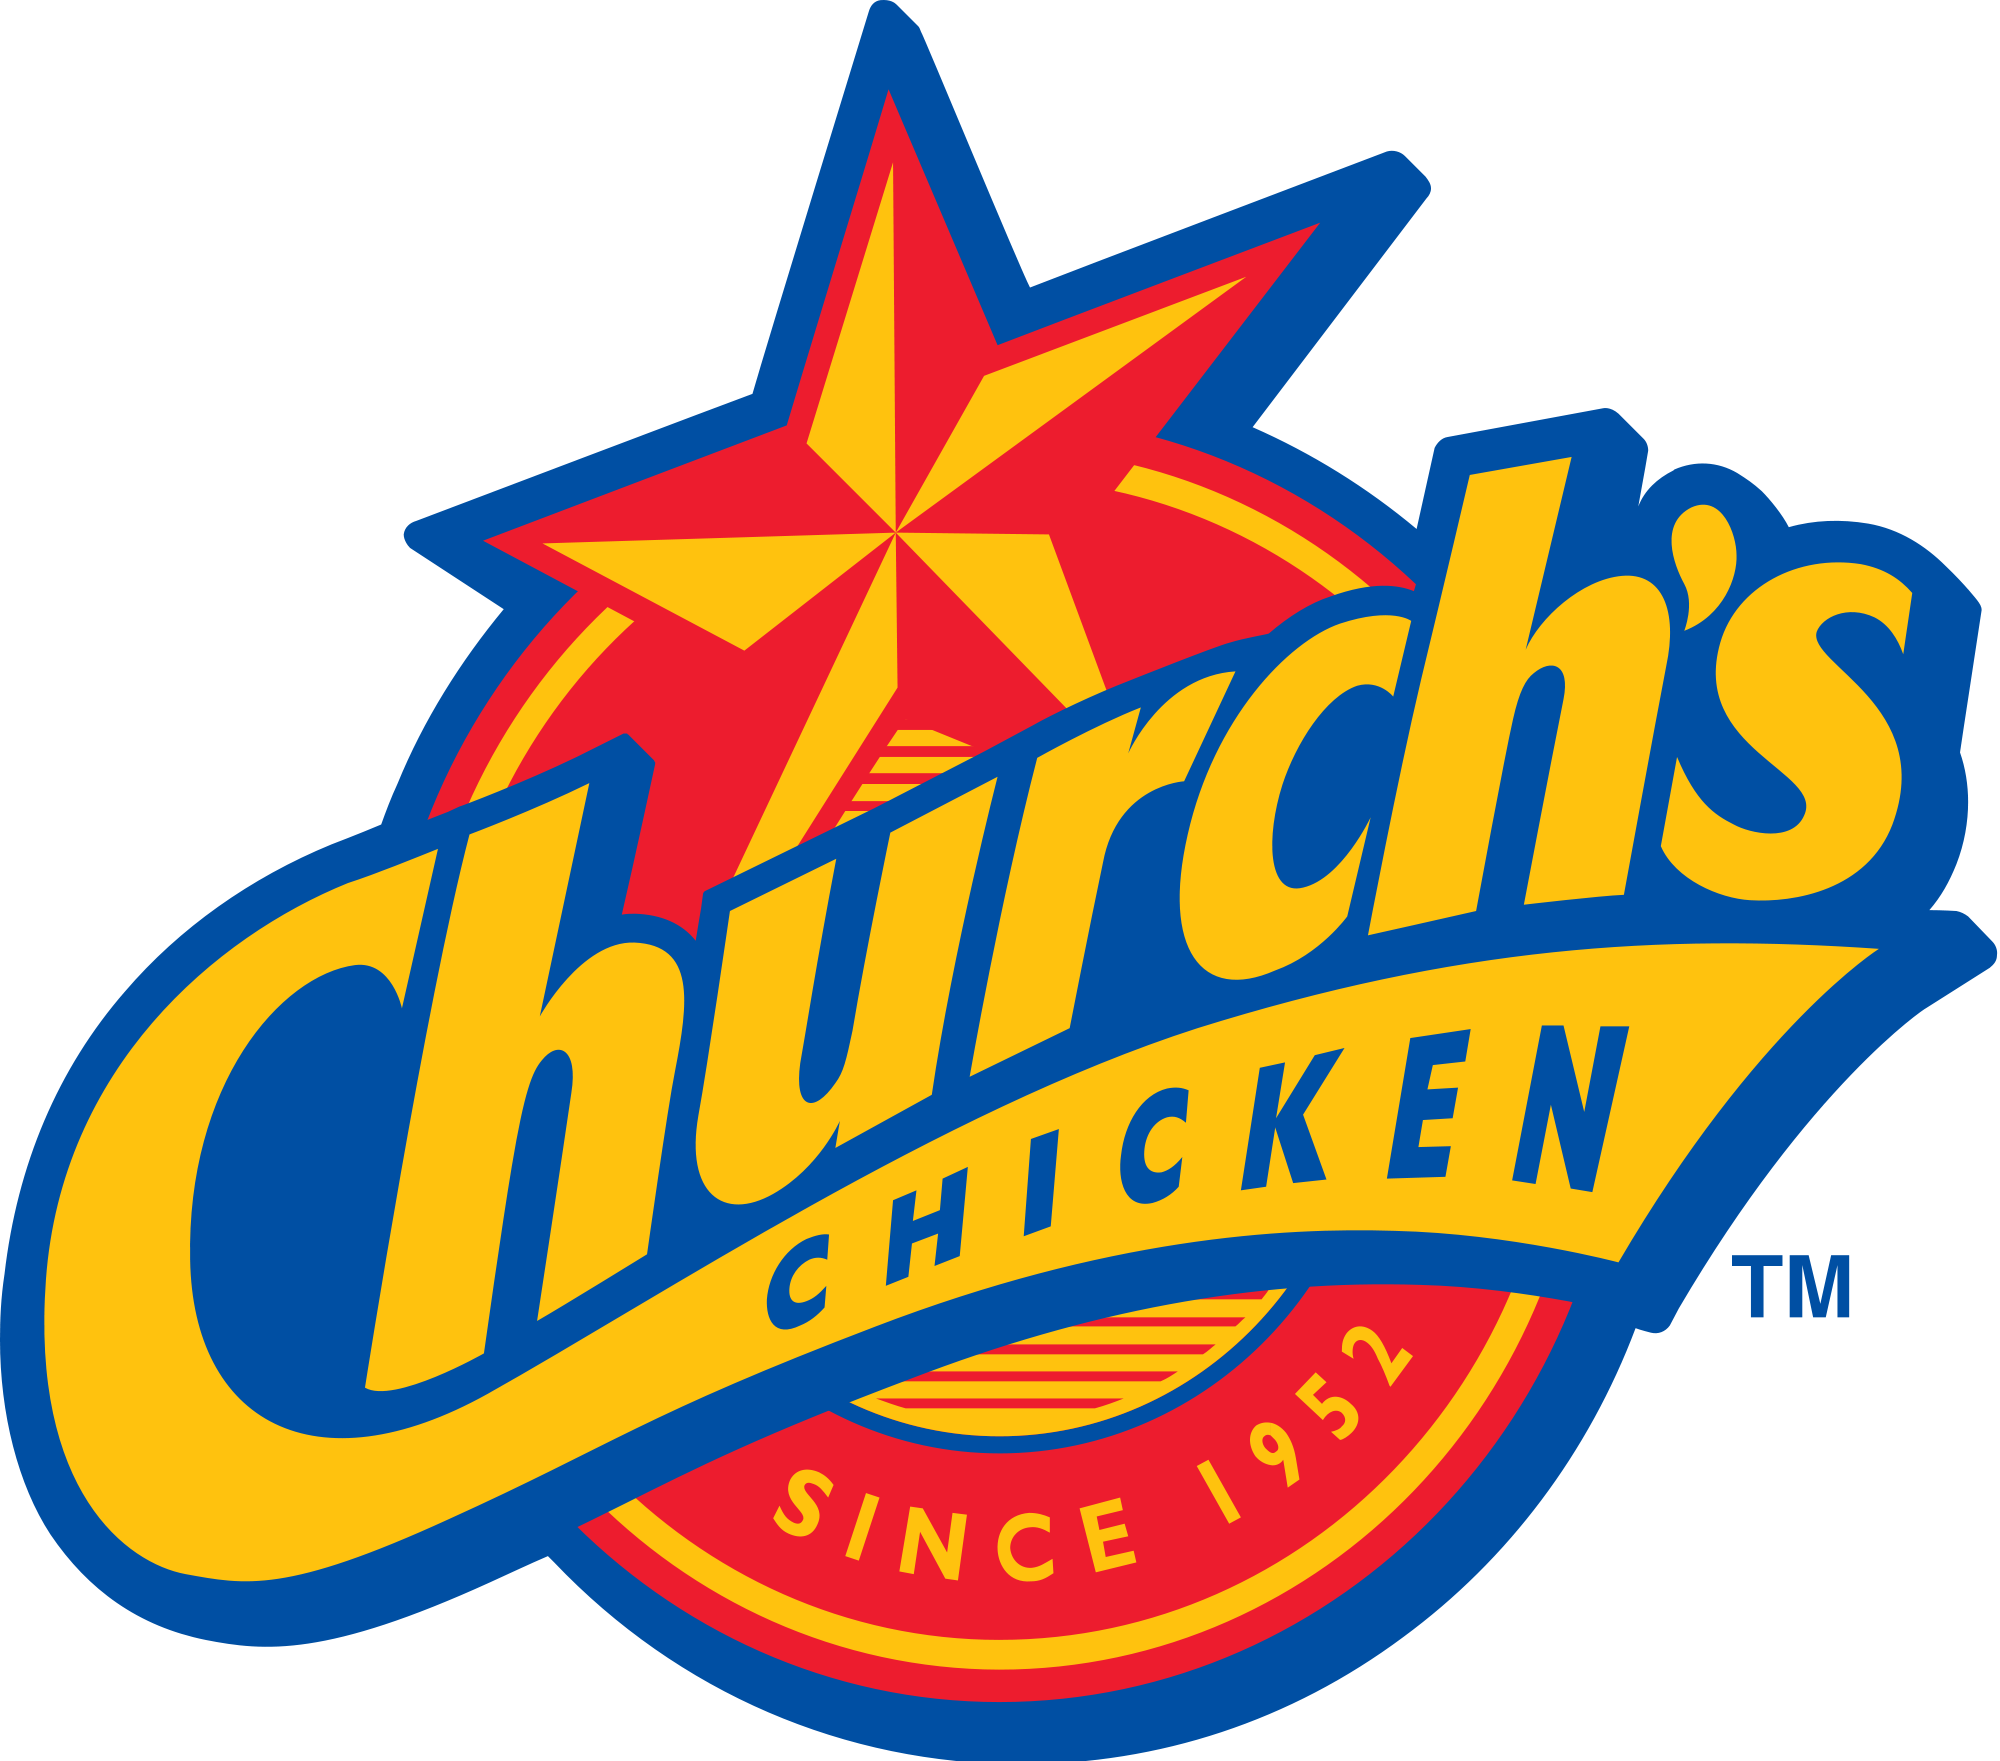 Churchs Chicken - Church's Chicken Logo Png (2000x1761), Png Download